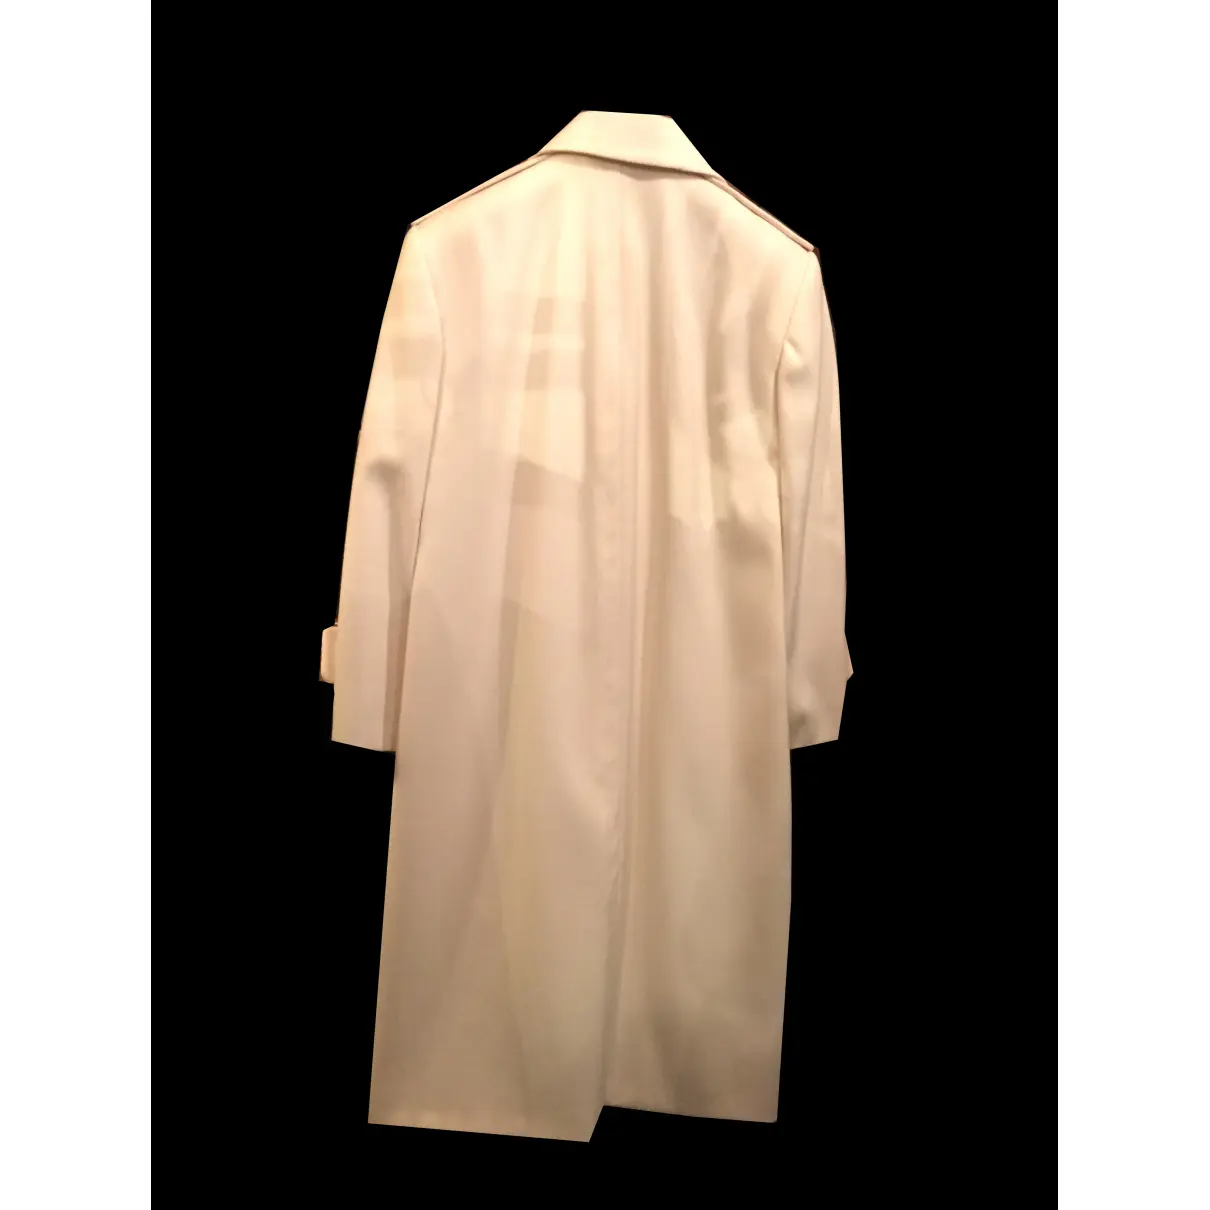 Buy Etienne Aigner Wool coat online